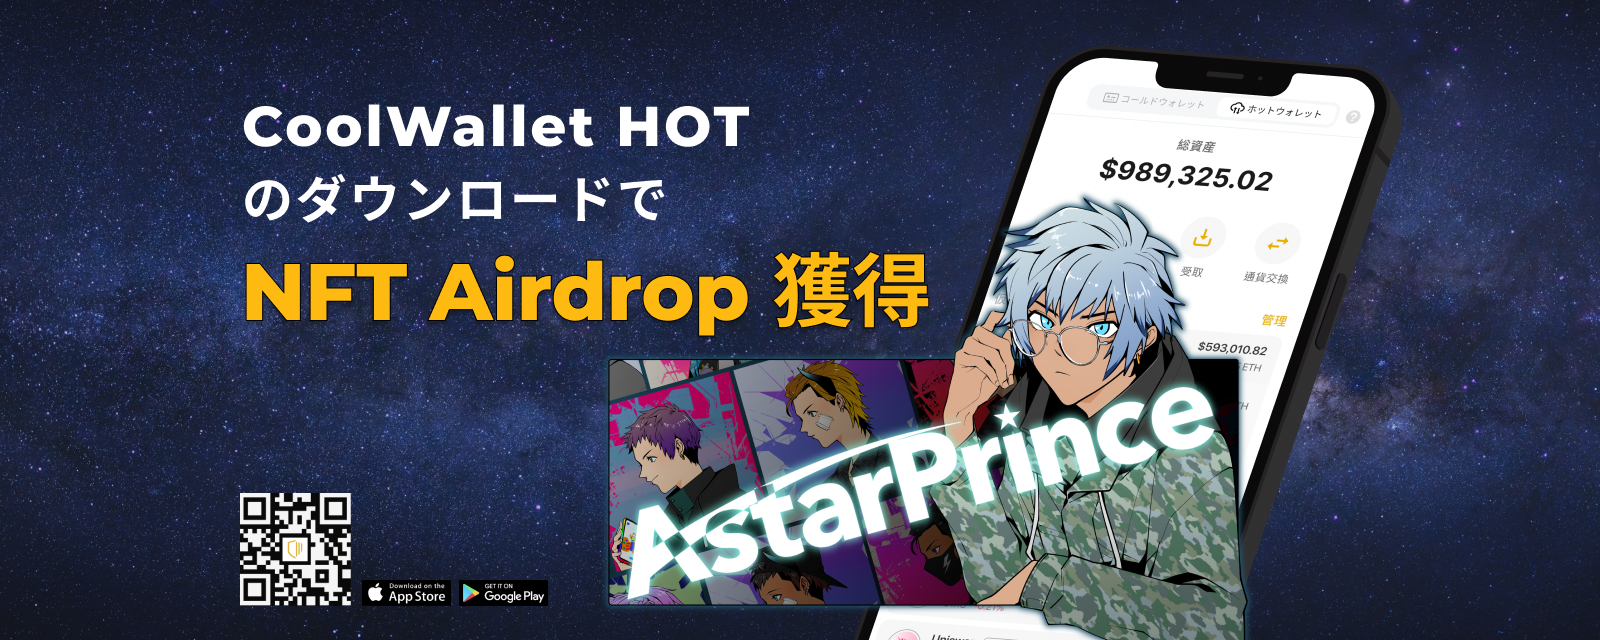 CoolWallet-HOT_AstarPrince-CBX-NFT-Airdrops_jp-2